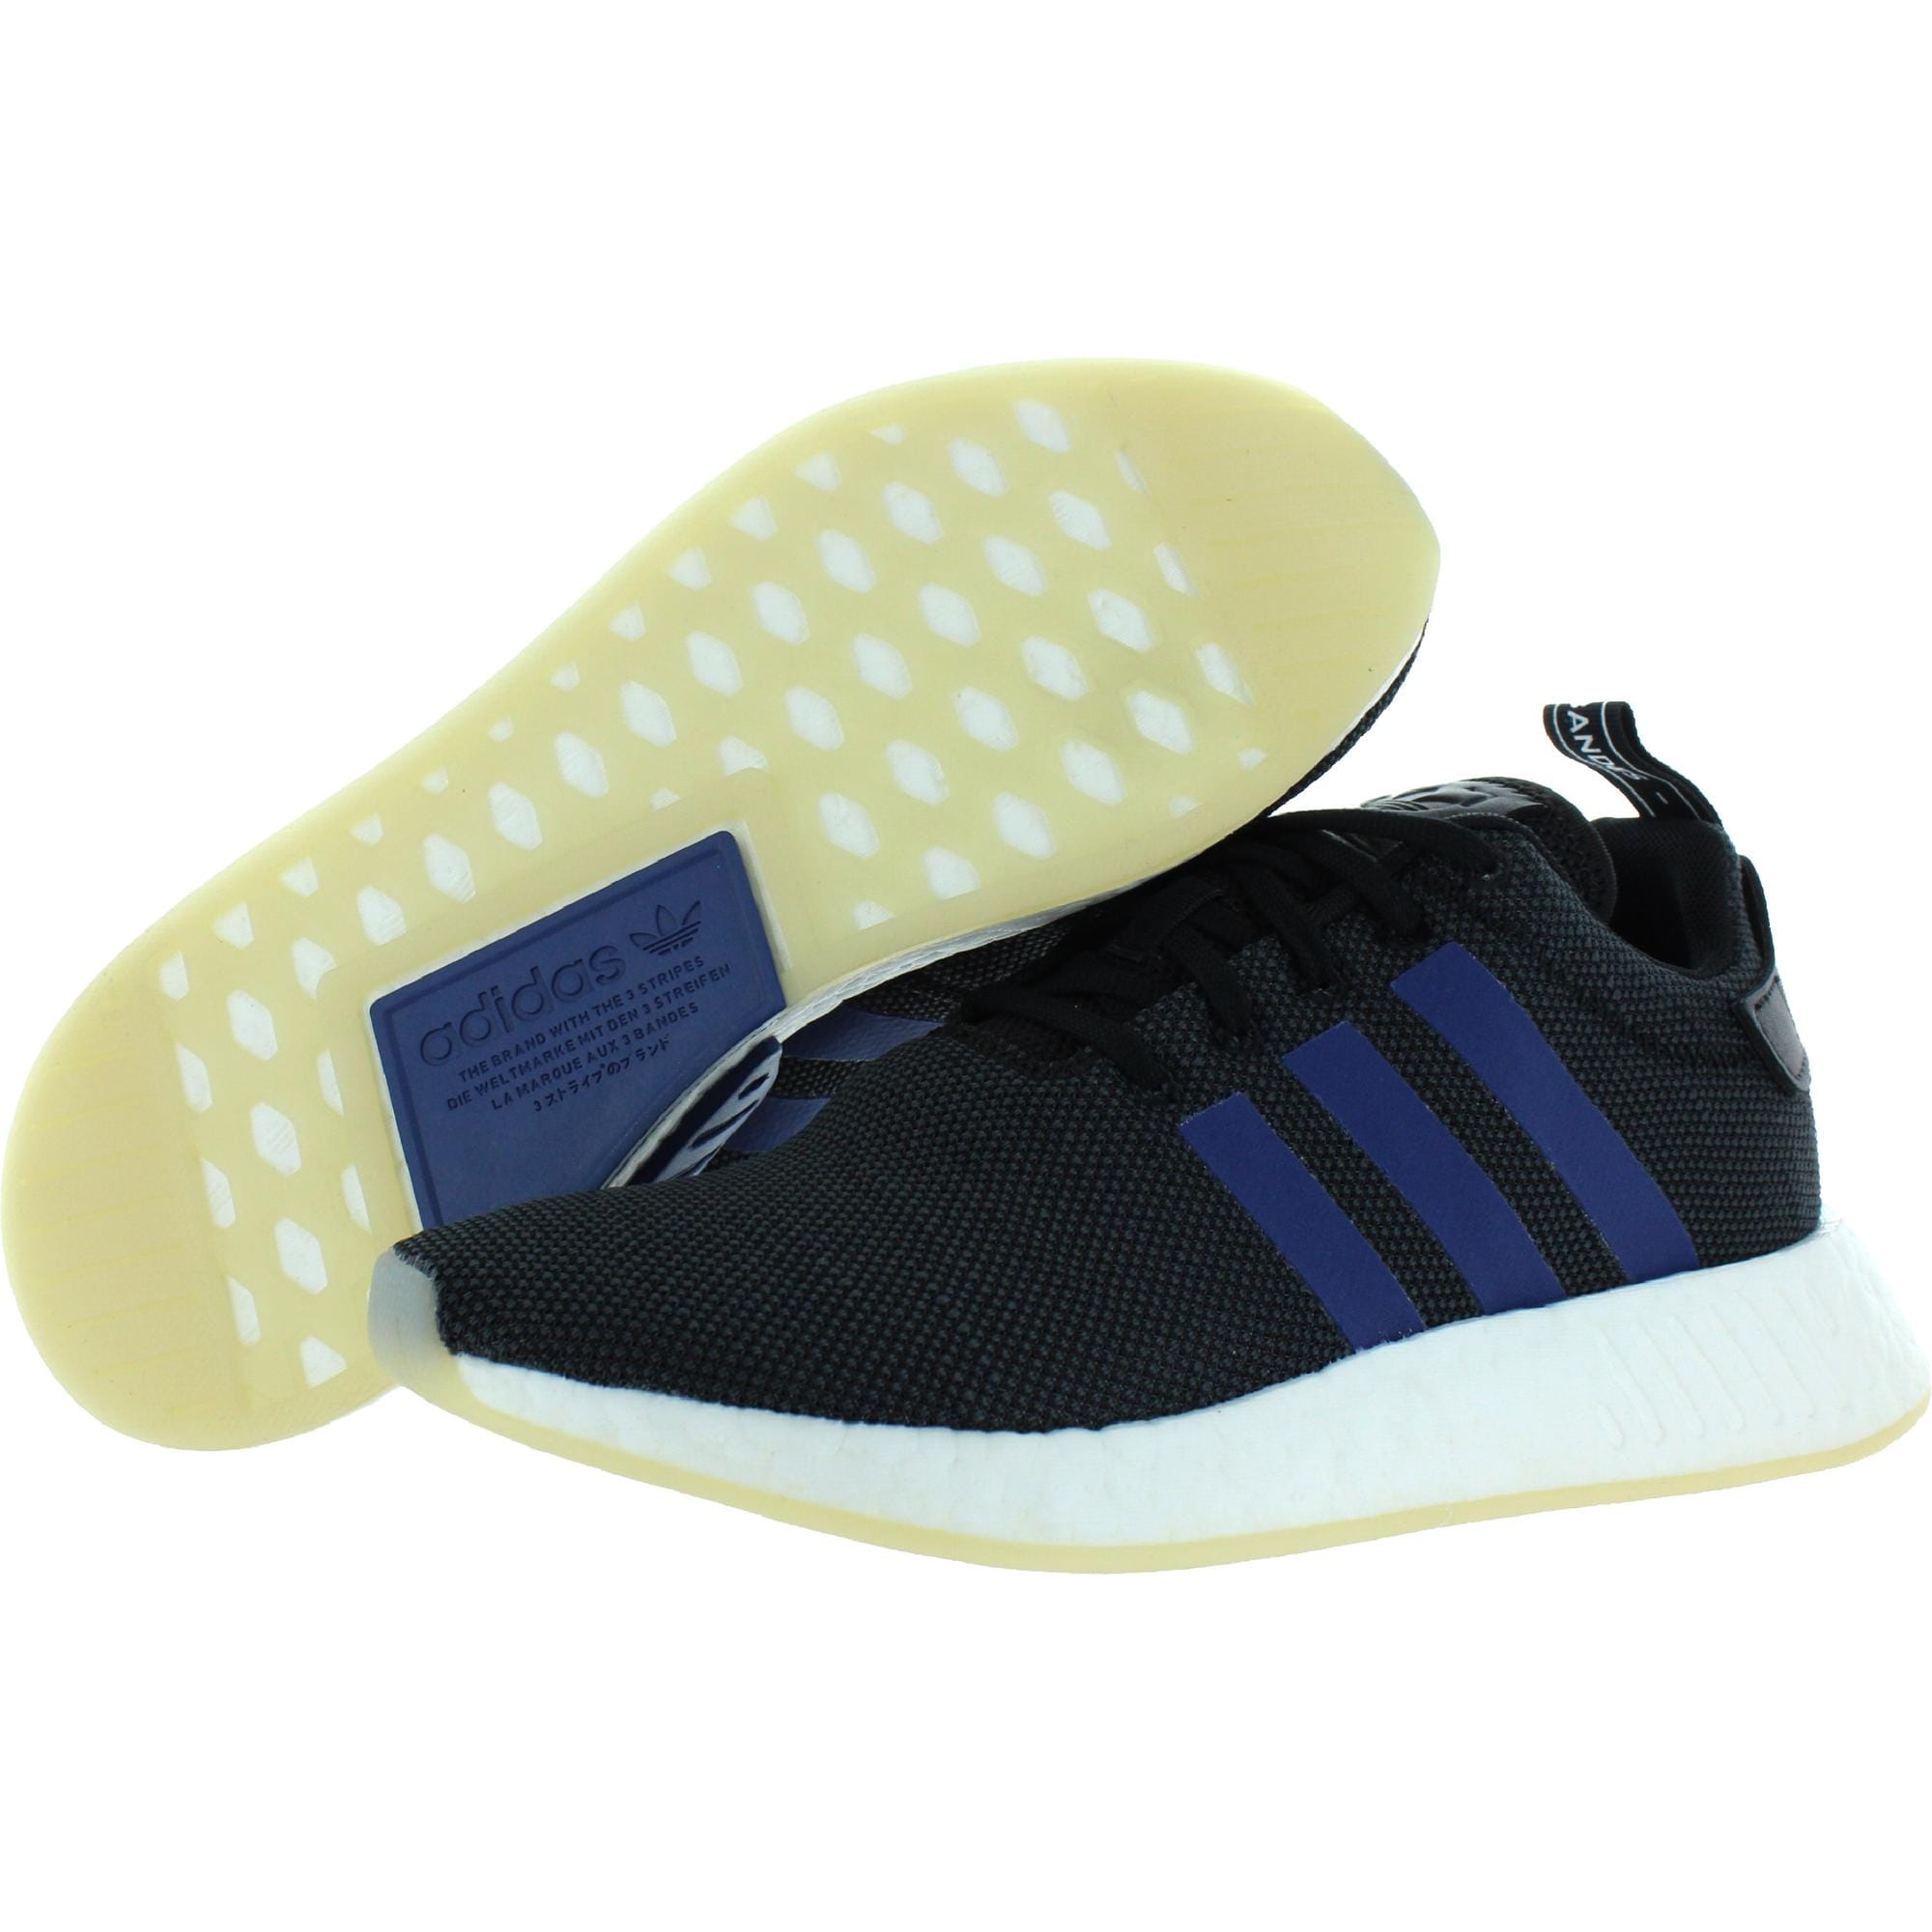 filosofi drivende Forestående Adidas Womens NMD R2 W Sneakers Fitness Gym - Black/Navy Blue/White -  Overstock - 30603401